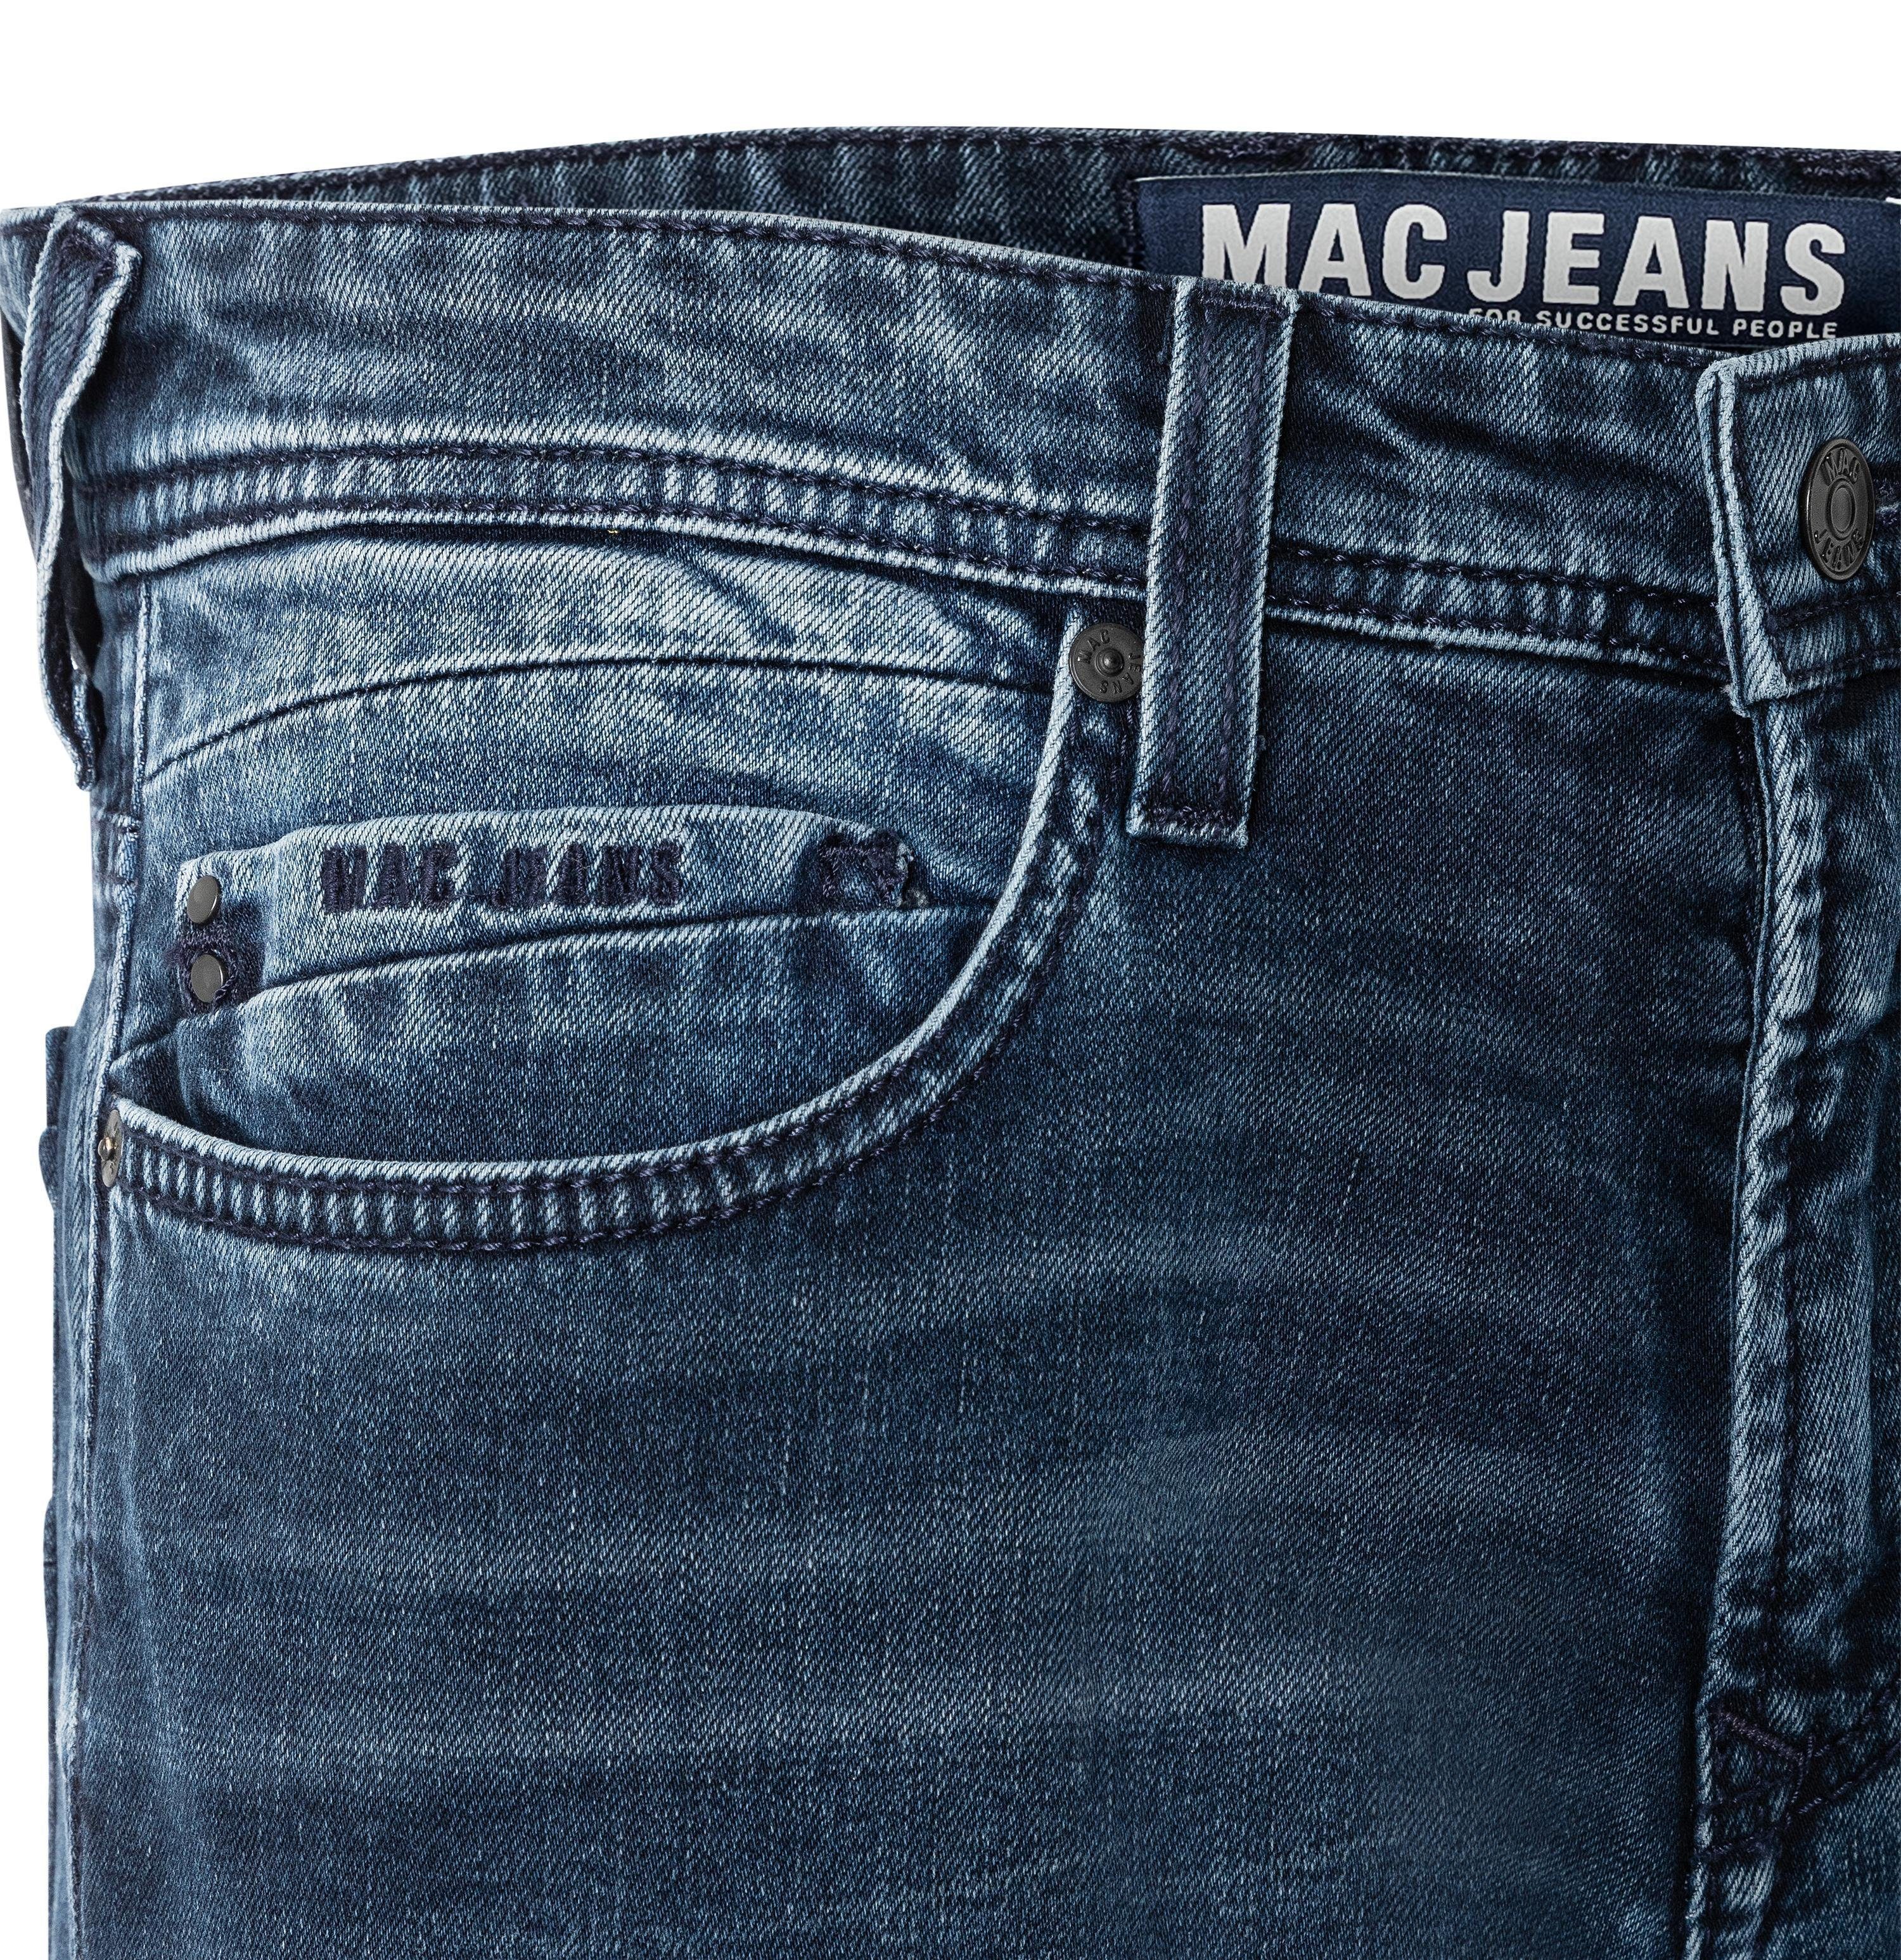 used used 0384-00-0982L BEN black blue 5-Pocket-Jeans authentic H997 MAC authentic MAC H997 blue black